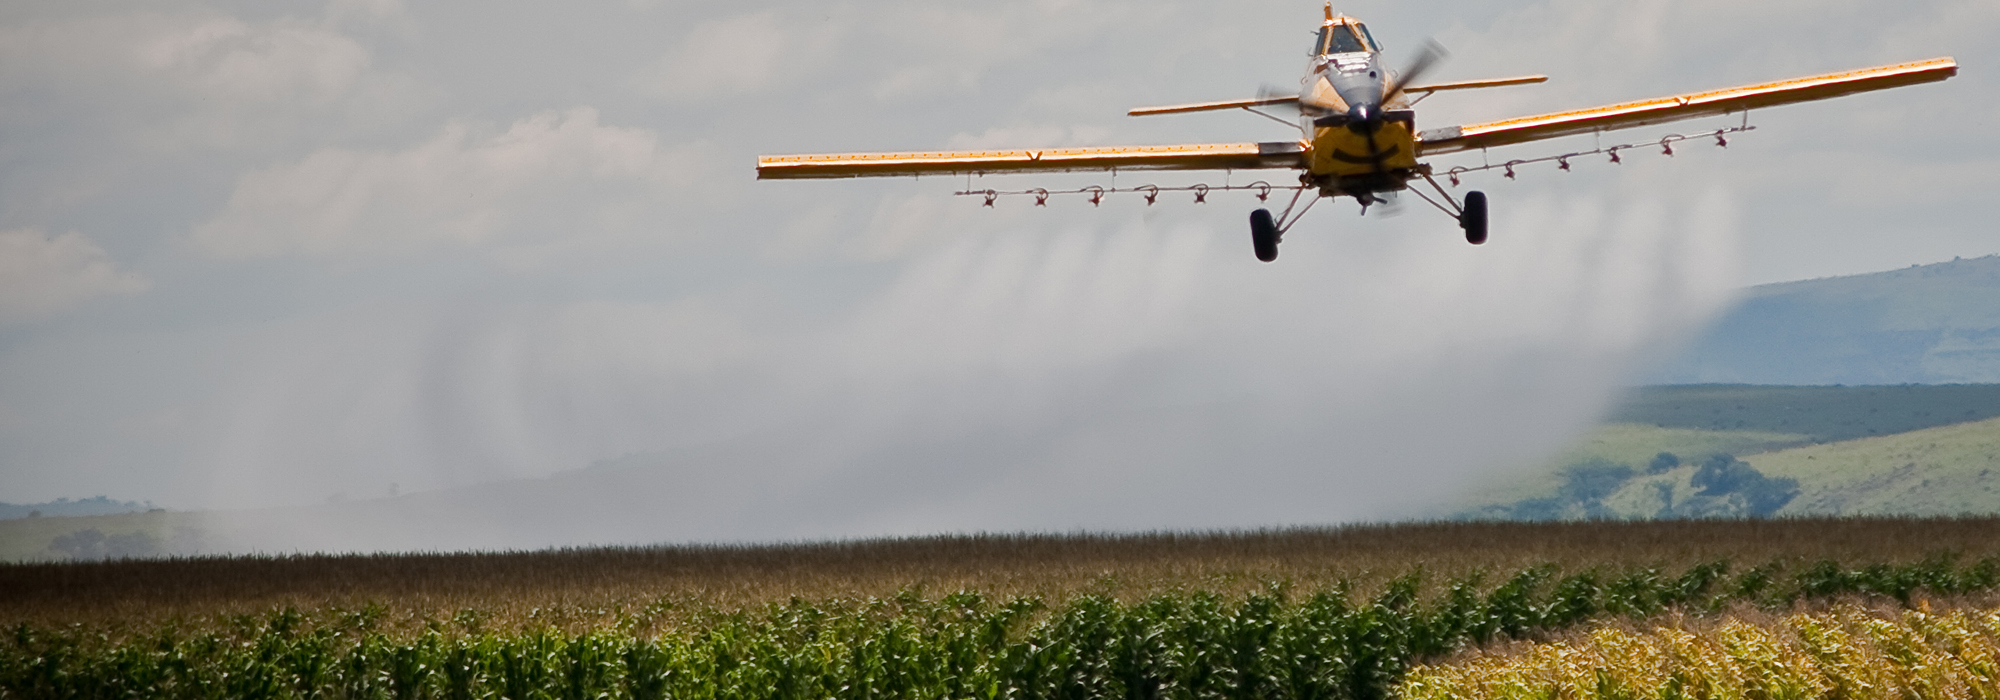 Quebec takes action on regulating pesticides